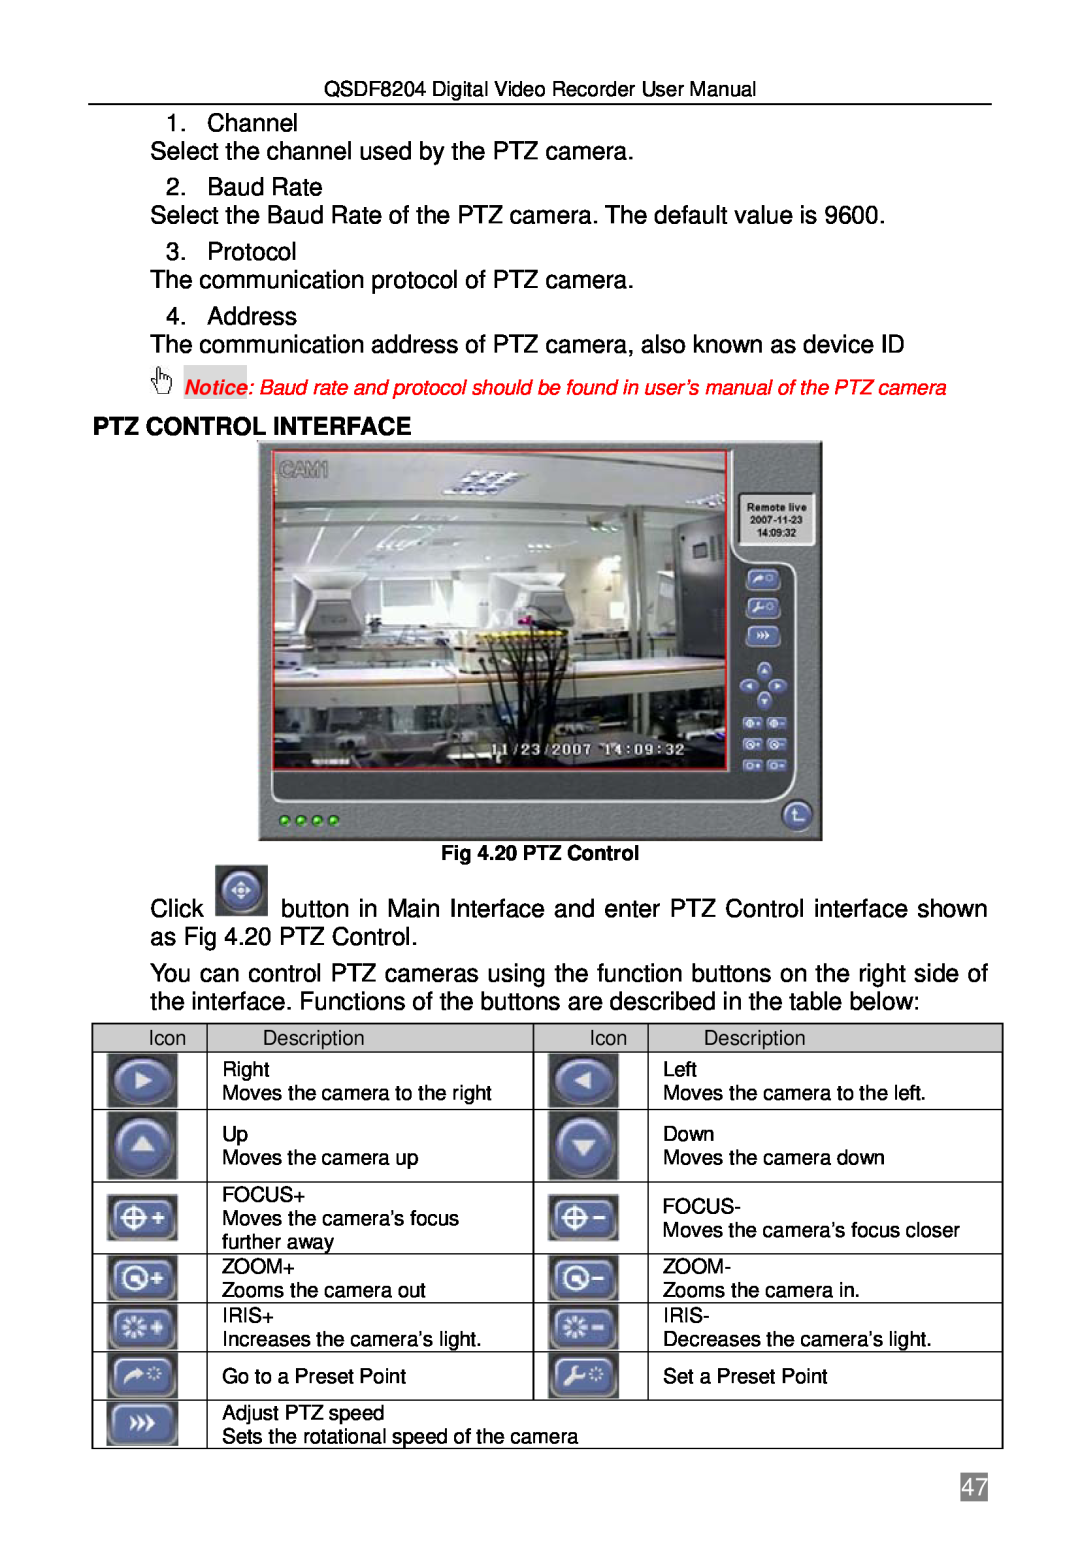 Q-See QSDF8204 user manual Ptz Control Interface 